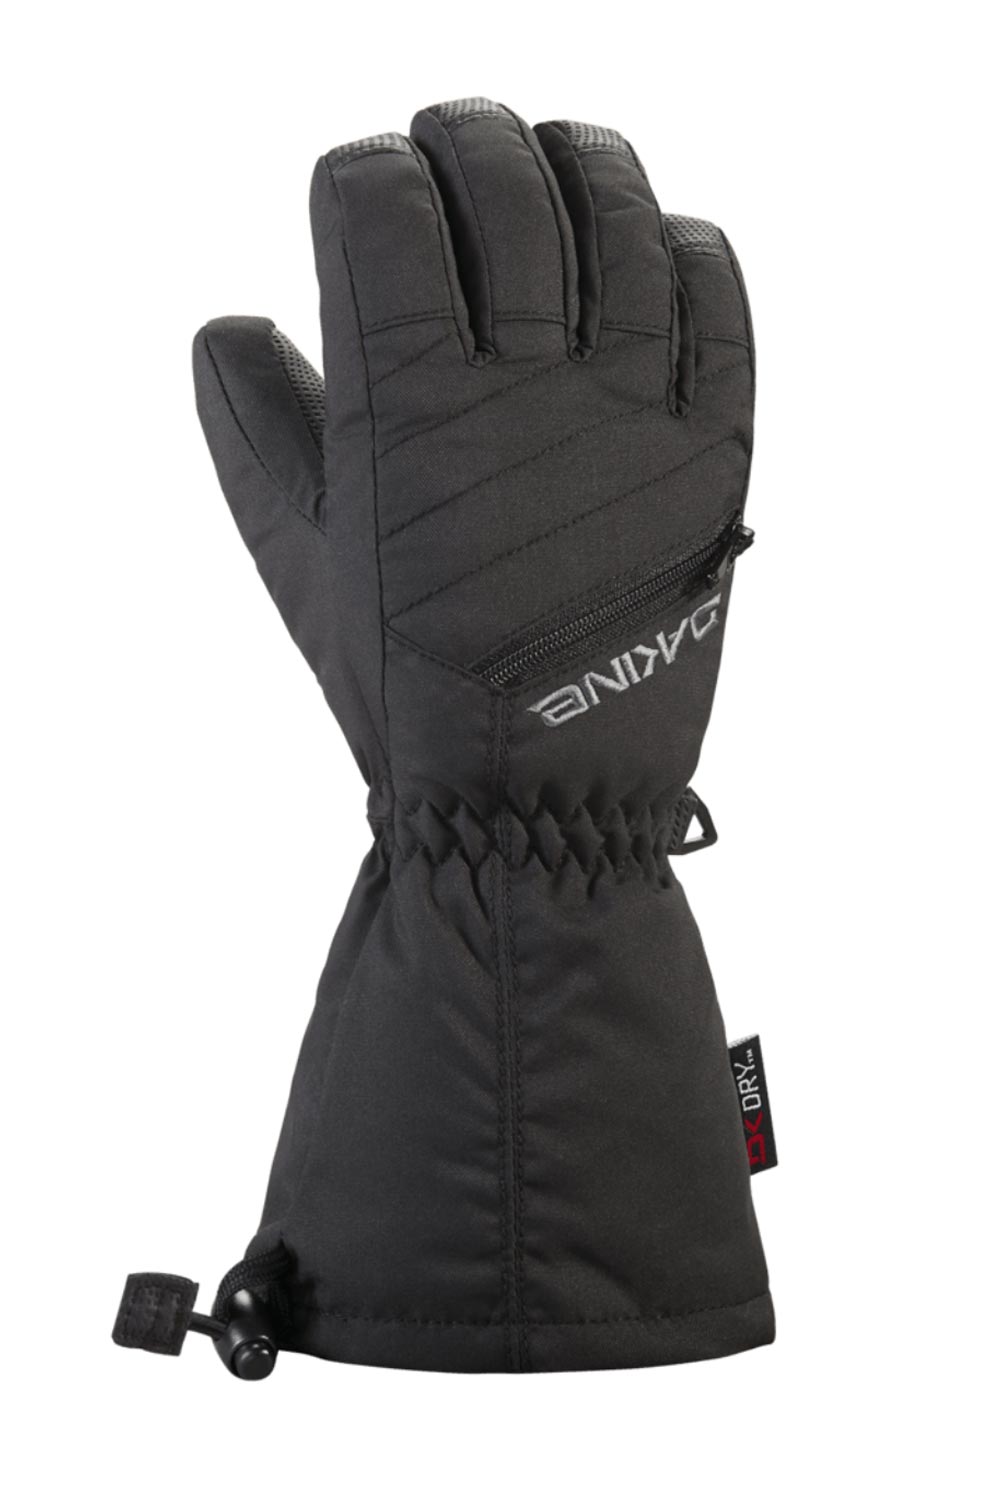 Kids' Dakine Tracker glove, black